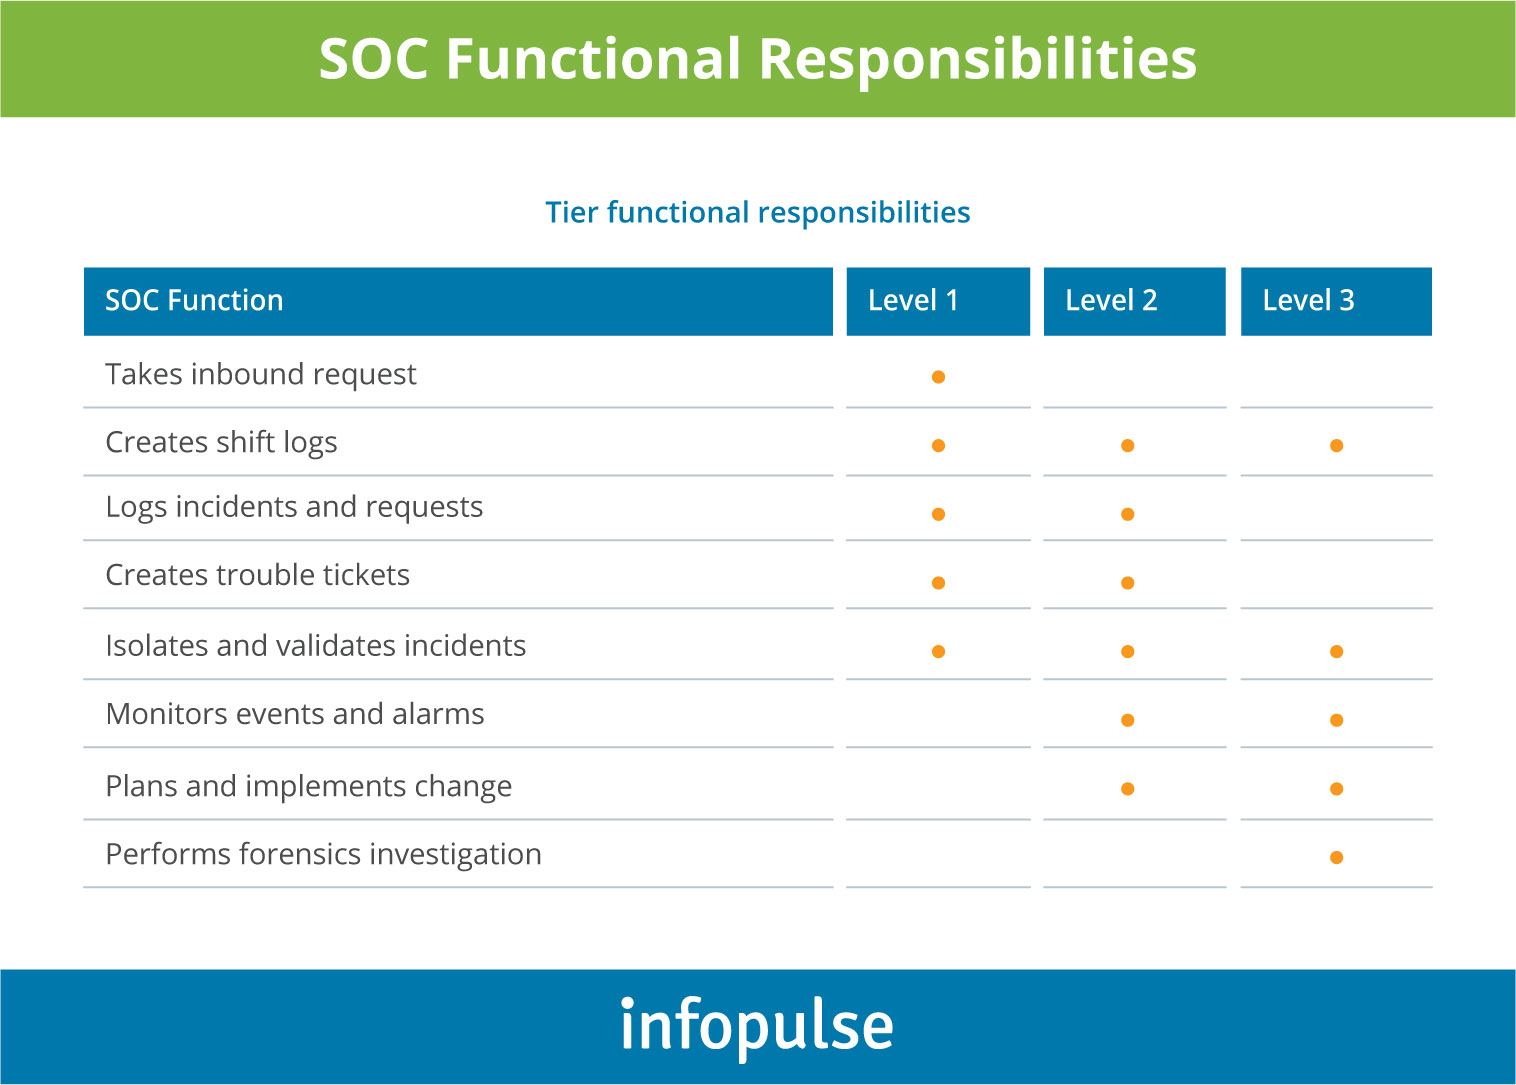 SOC Functional Responsibilities  - Infopulse - 1